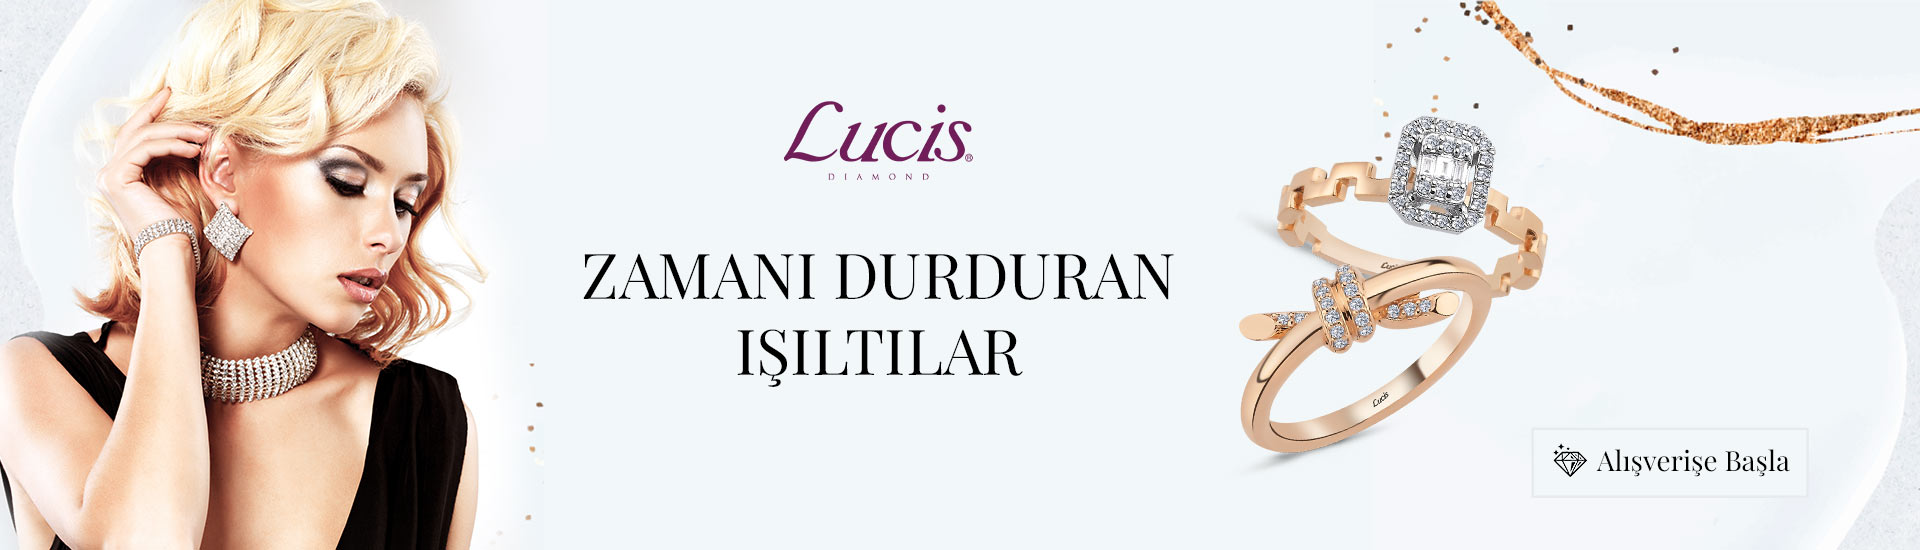 Lucis Pırlanta